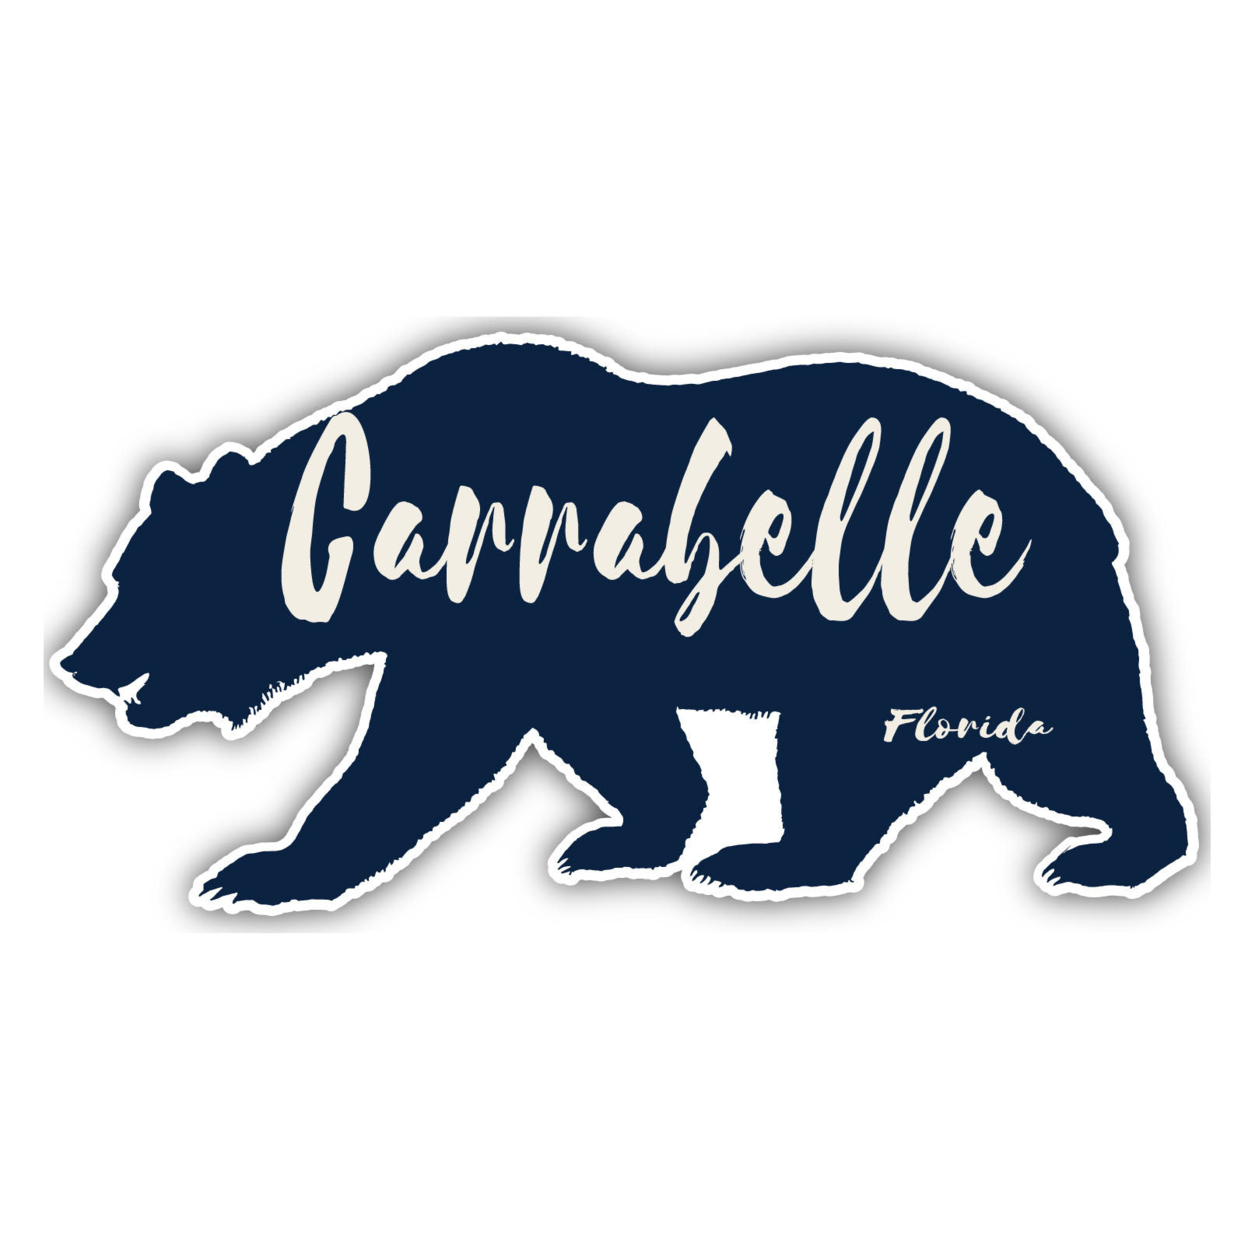 Carrabelle Florida Souvenir Decorative Stickers (Choose Theme And Size) - 4-Pack, 10-Inch, Bear